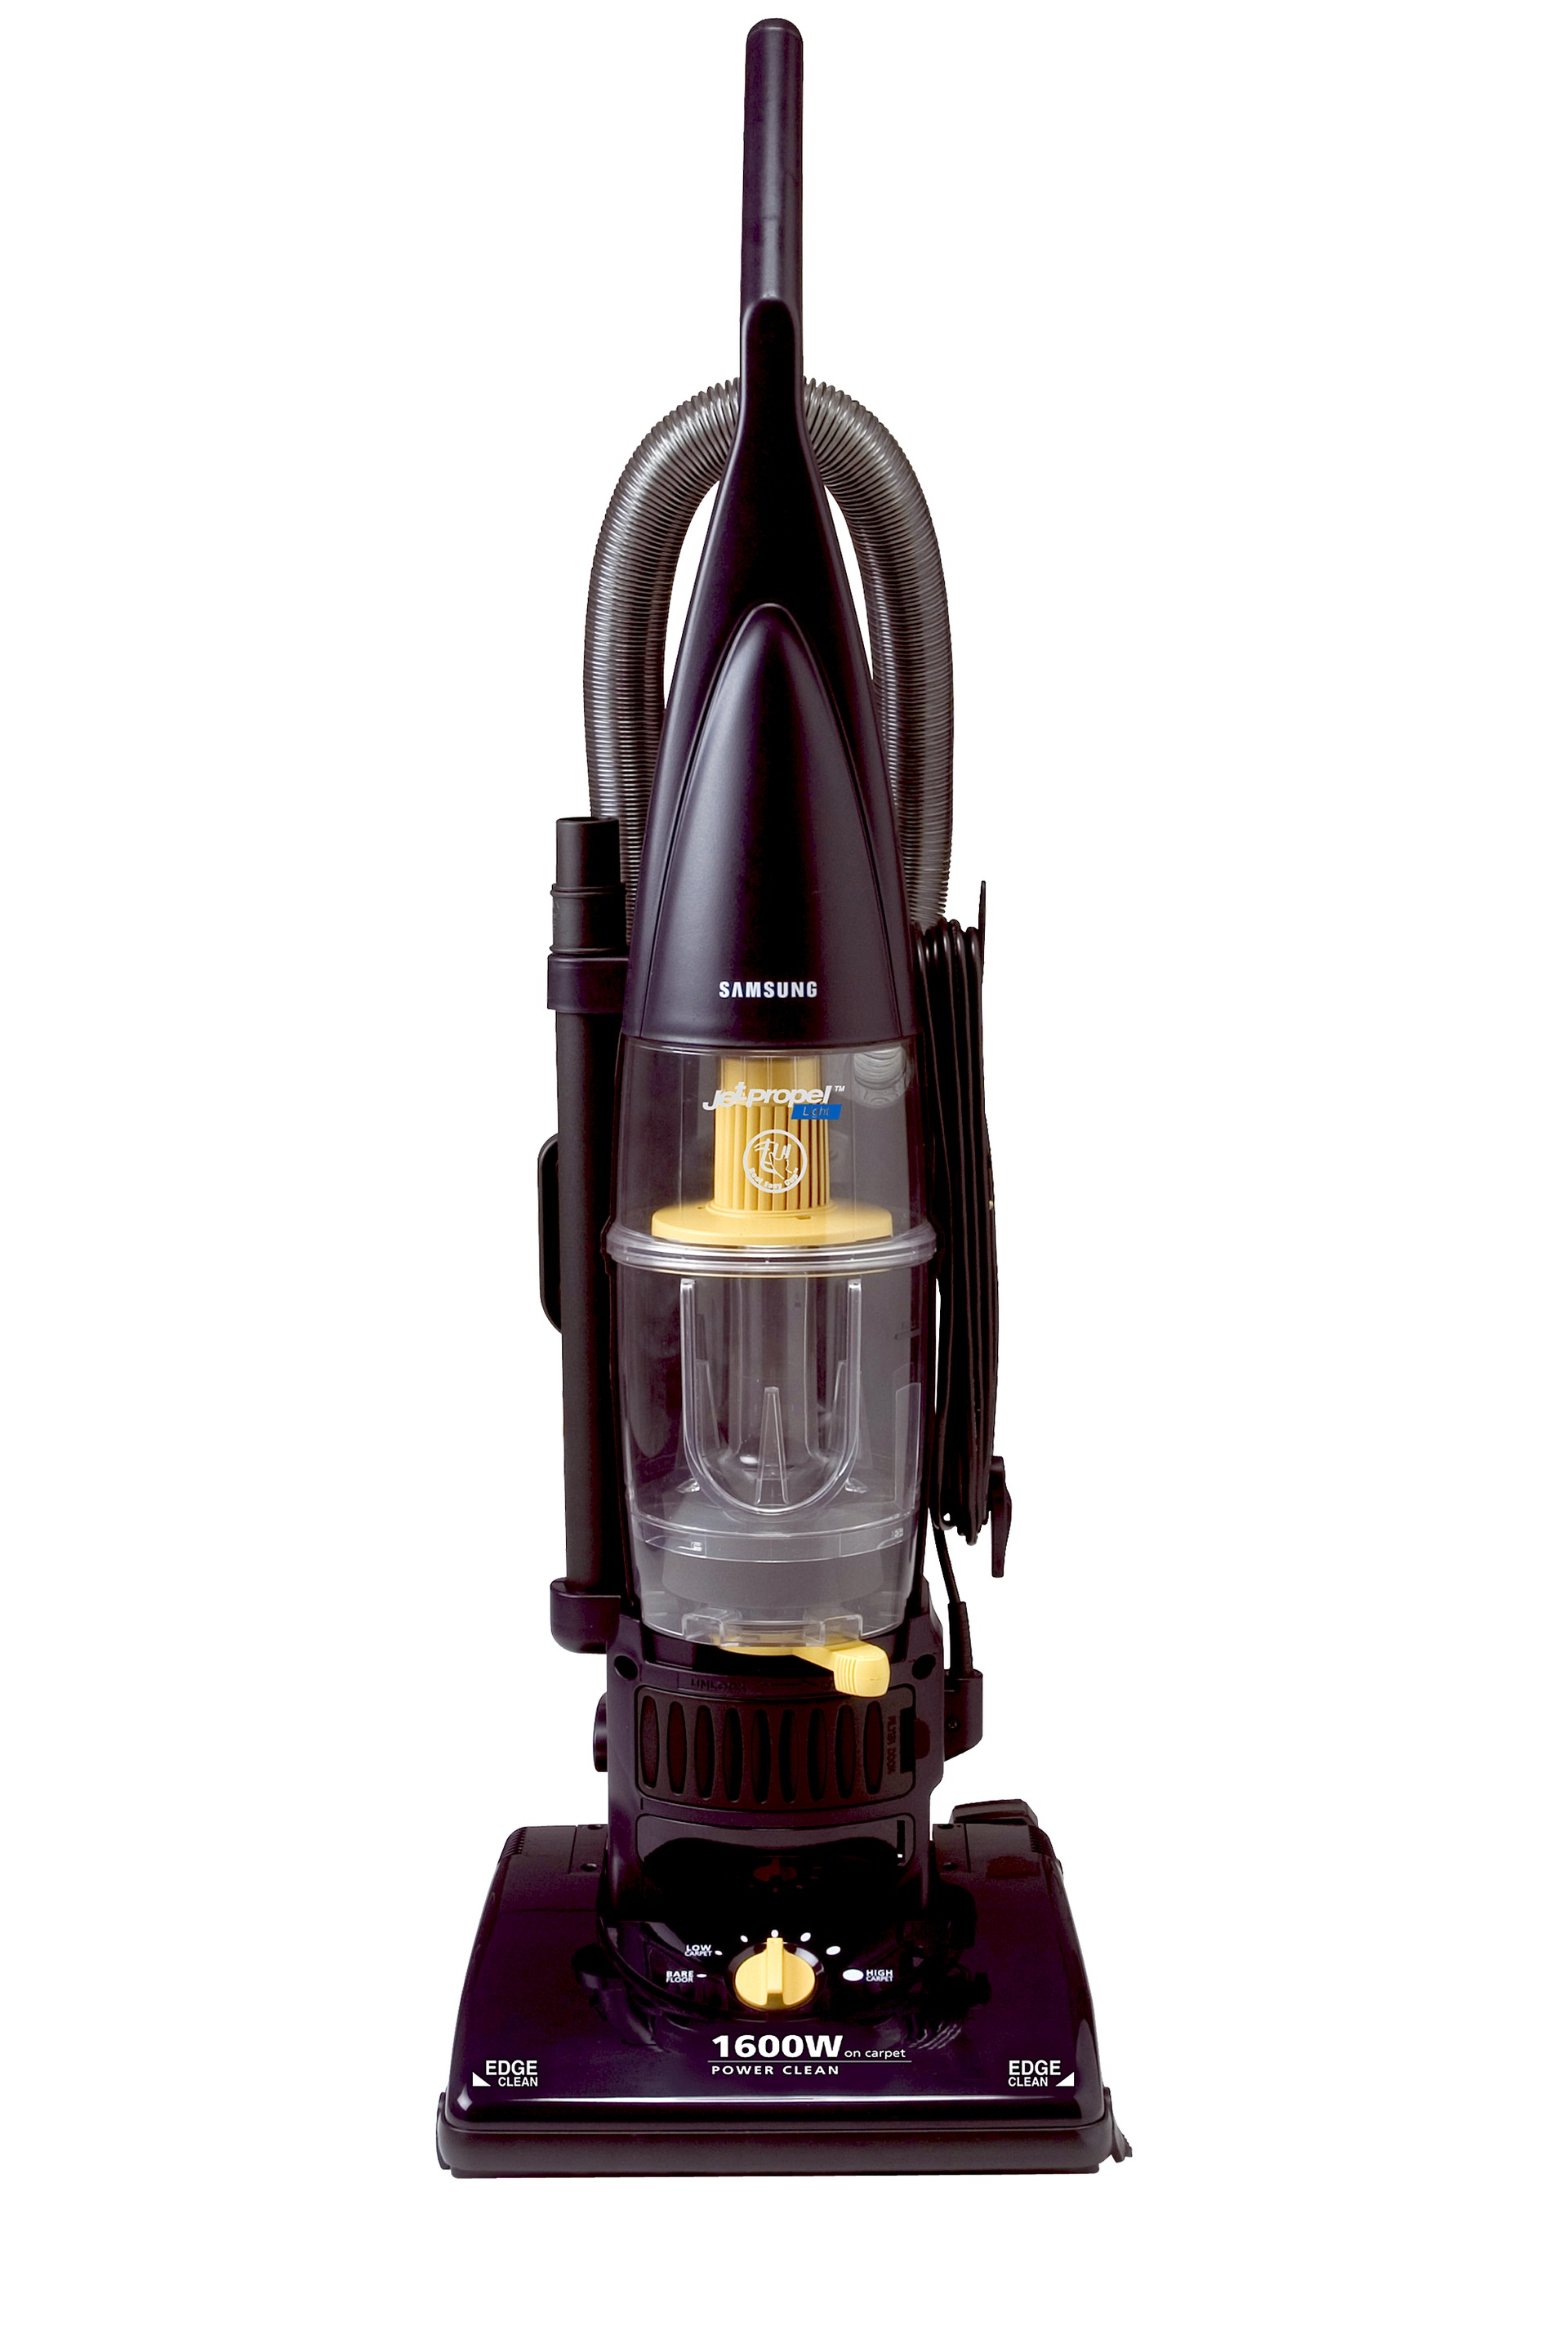 SU2920 1800W Bagless Upright Vacuum Cleaner | Samsung Support UK2000 x 3000